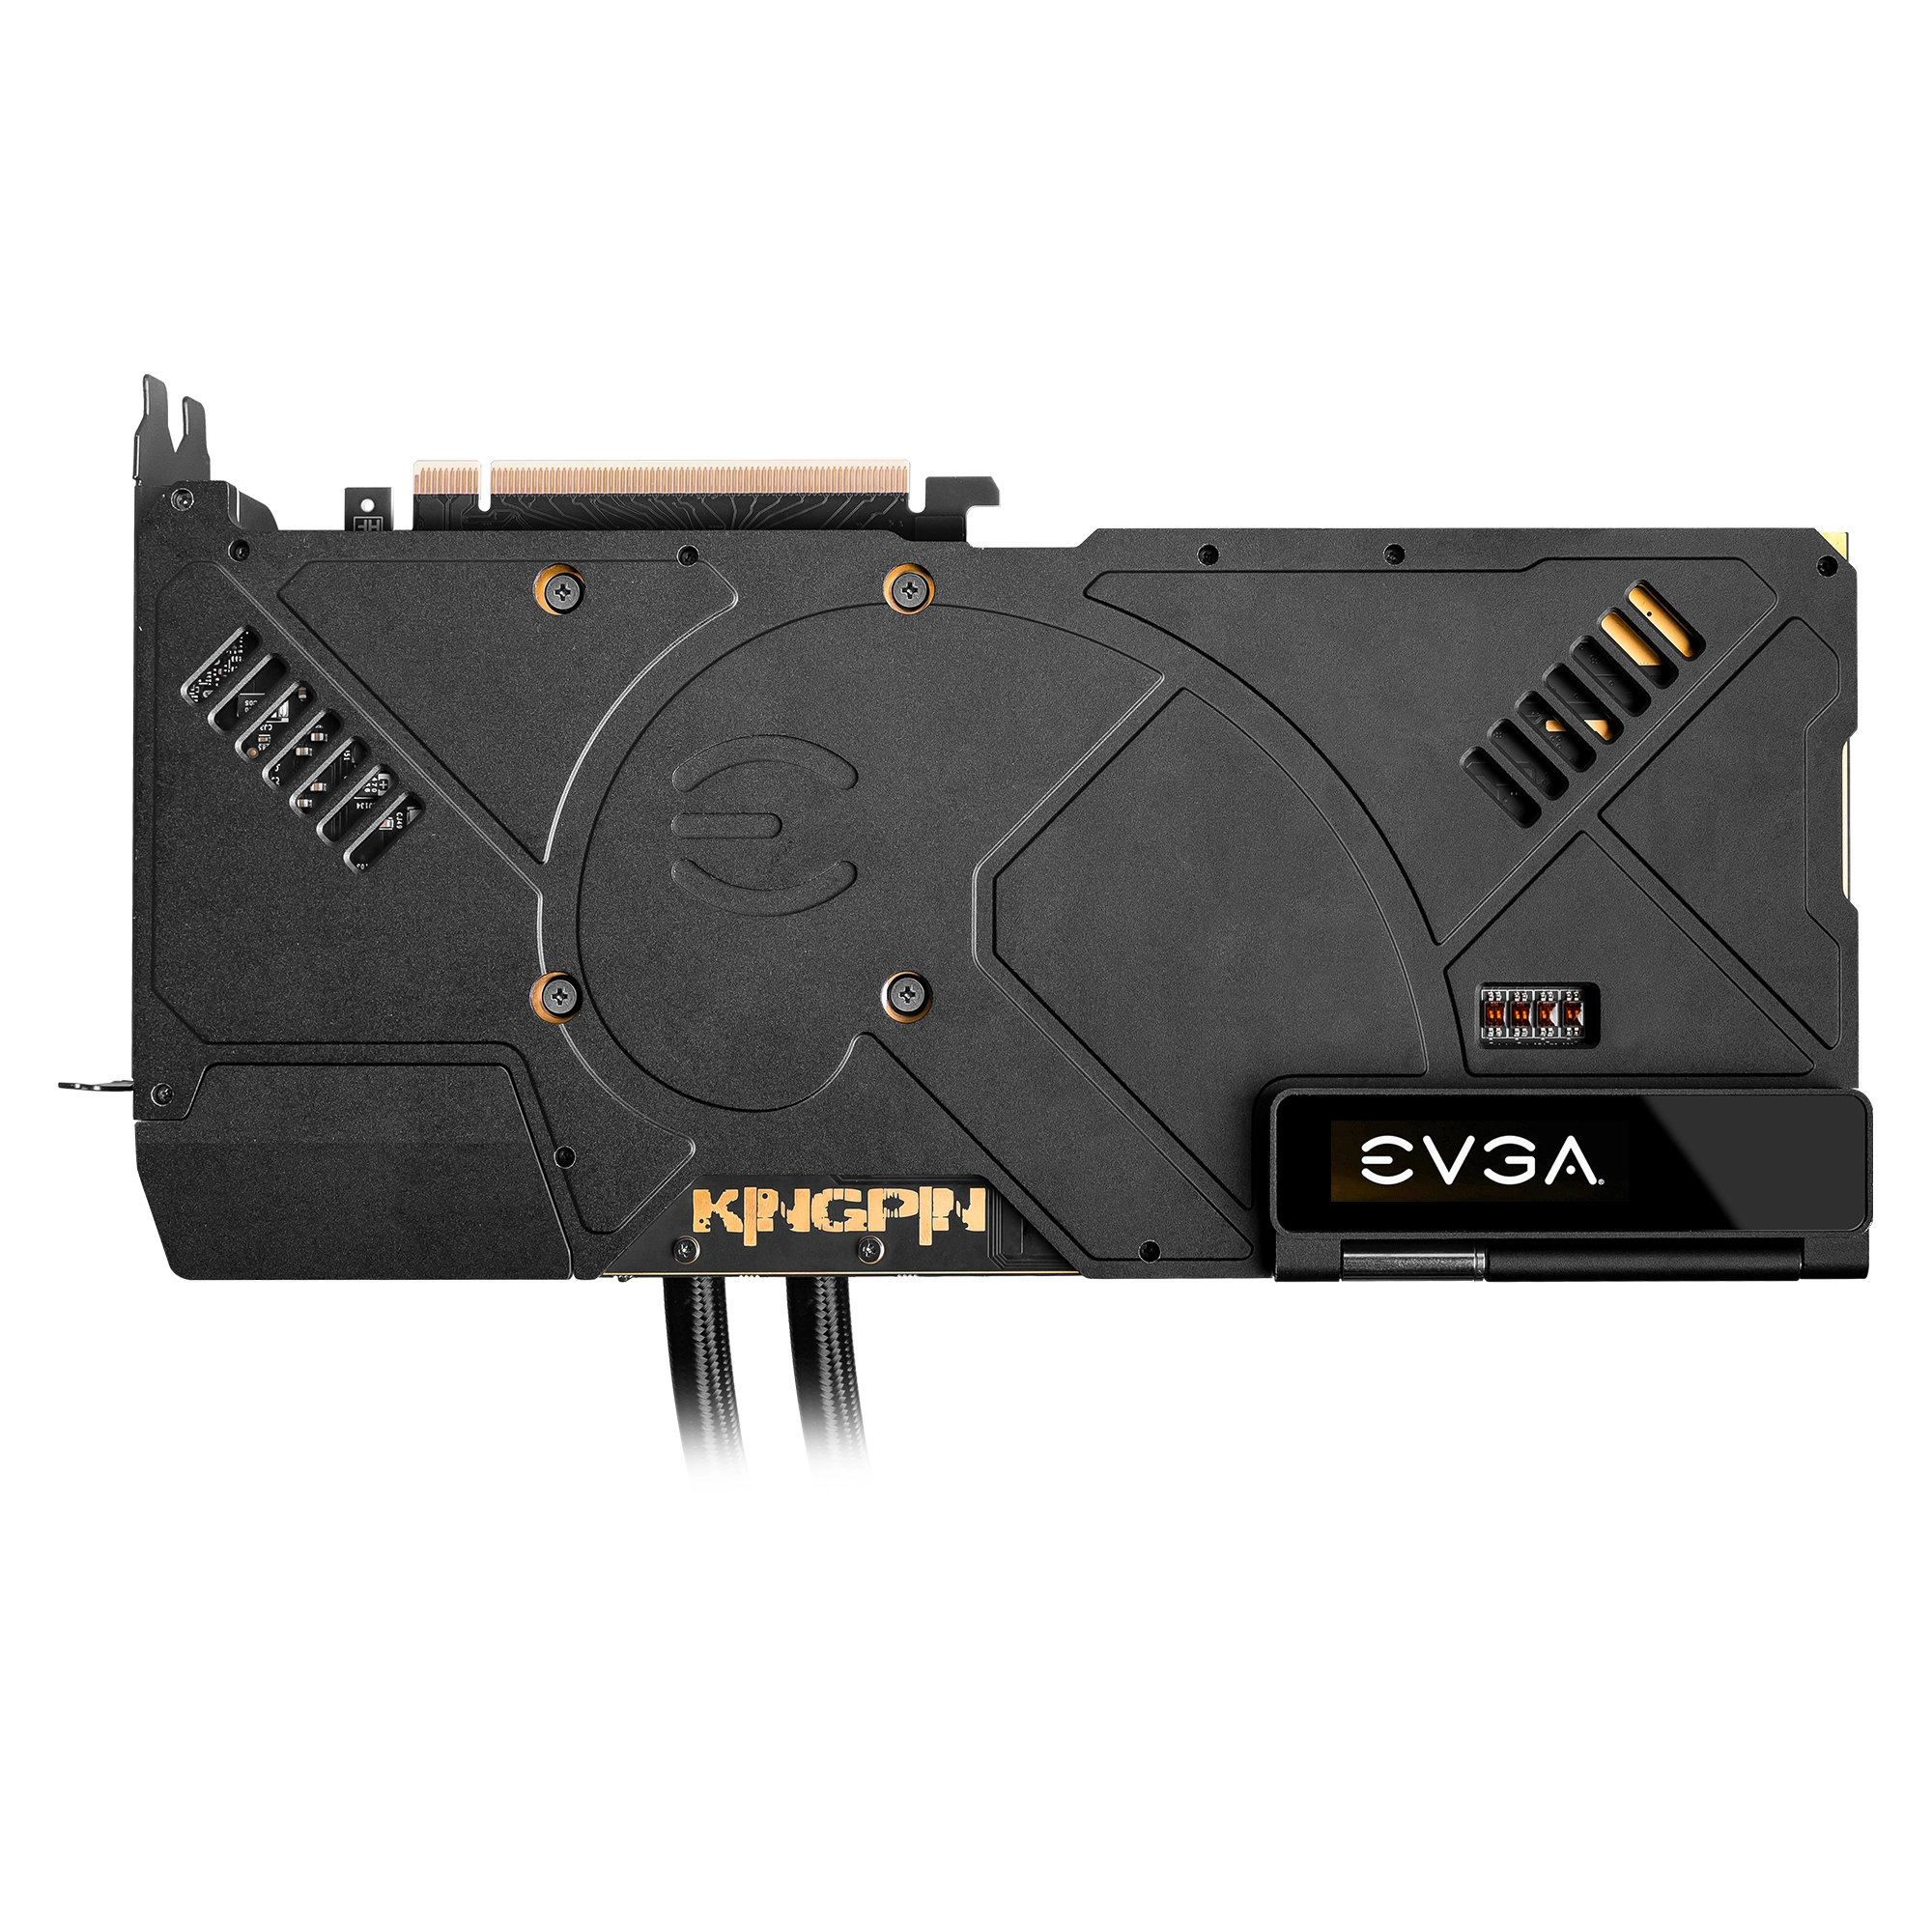 EVGA GeForce RTX 3090 KINGPIN Back View